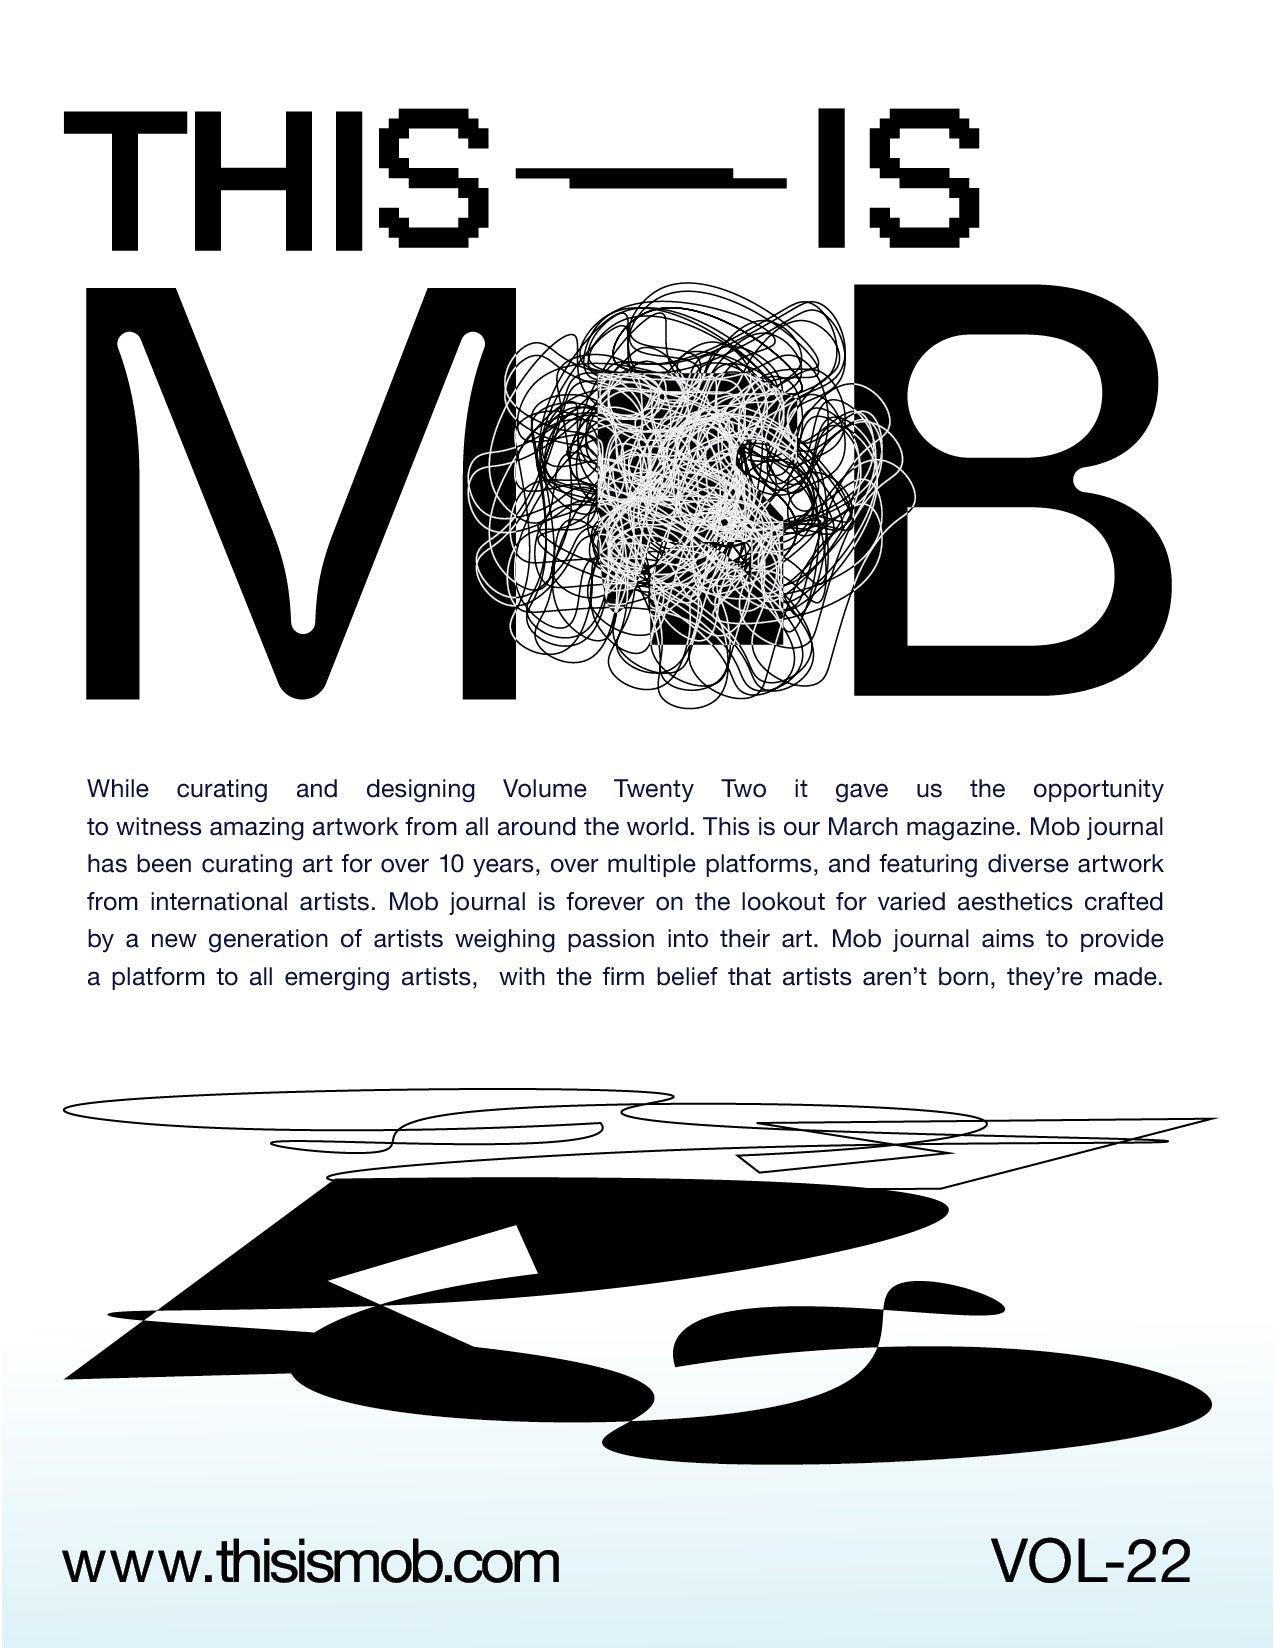 MOB JOURNAL | VOLUME TWENTY TWO | ISSUE #11 - Mob Journal